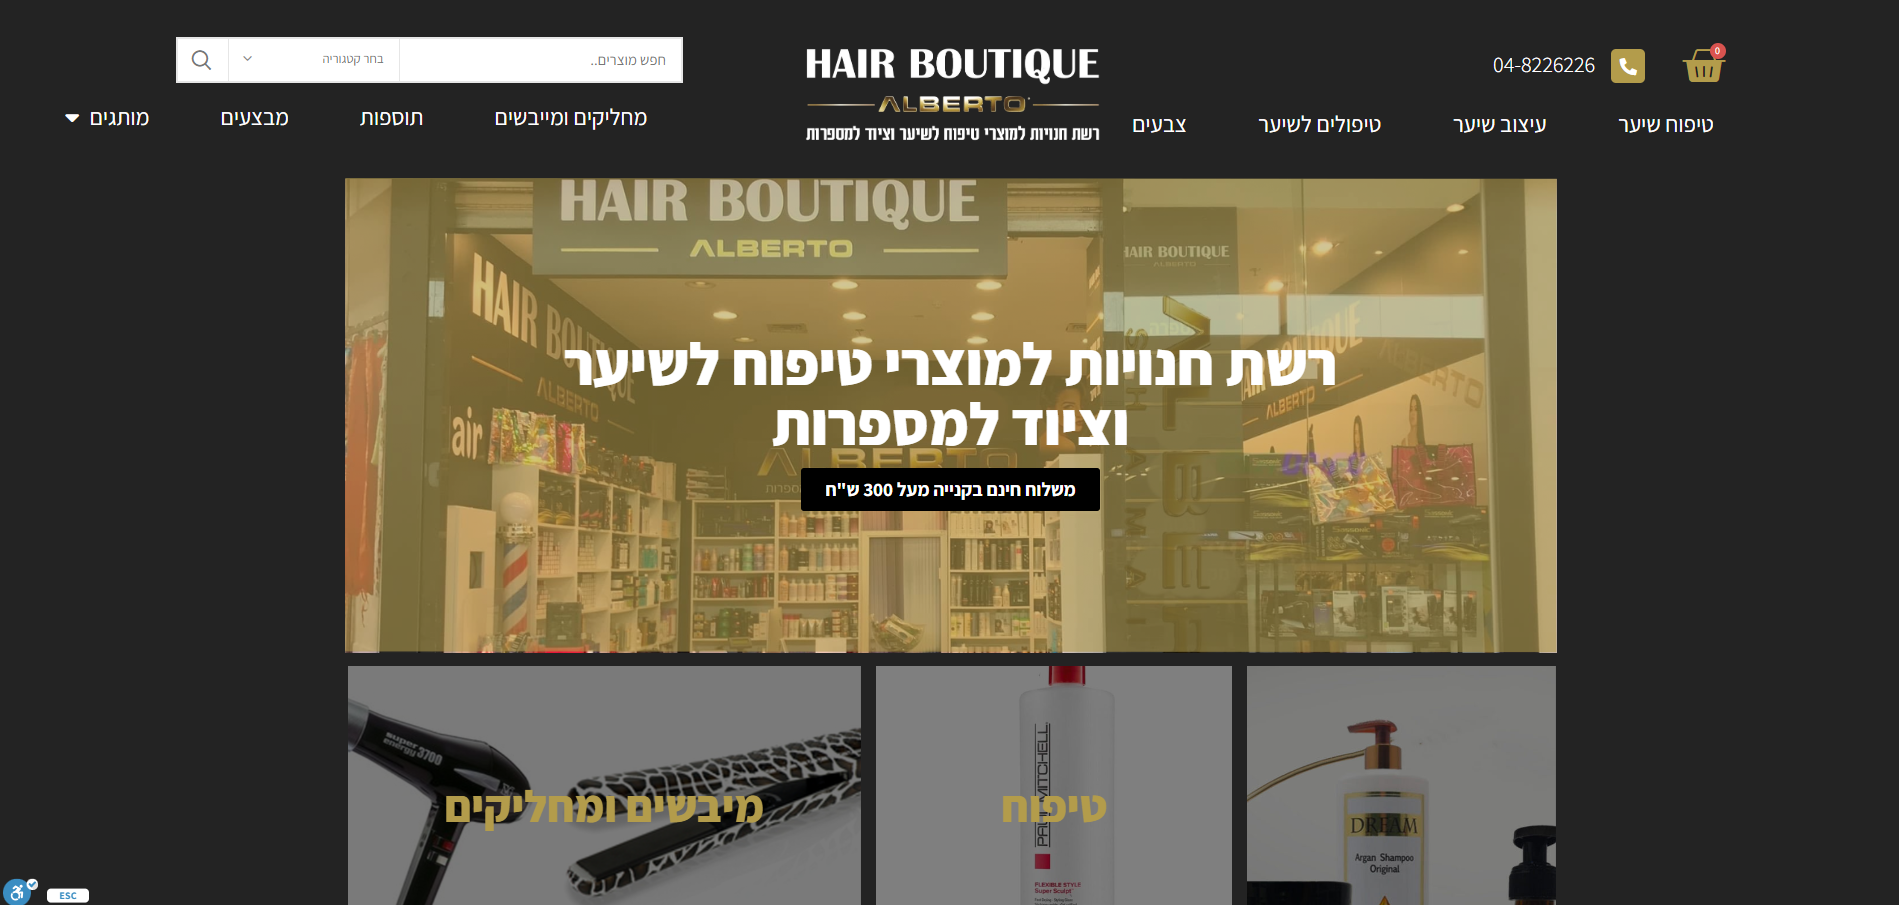 HAIRBOUTIQUE רשת חנויות למוצרי טיפוח לשיעור וציוד למספרות